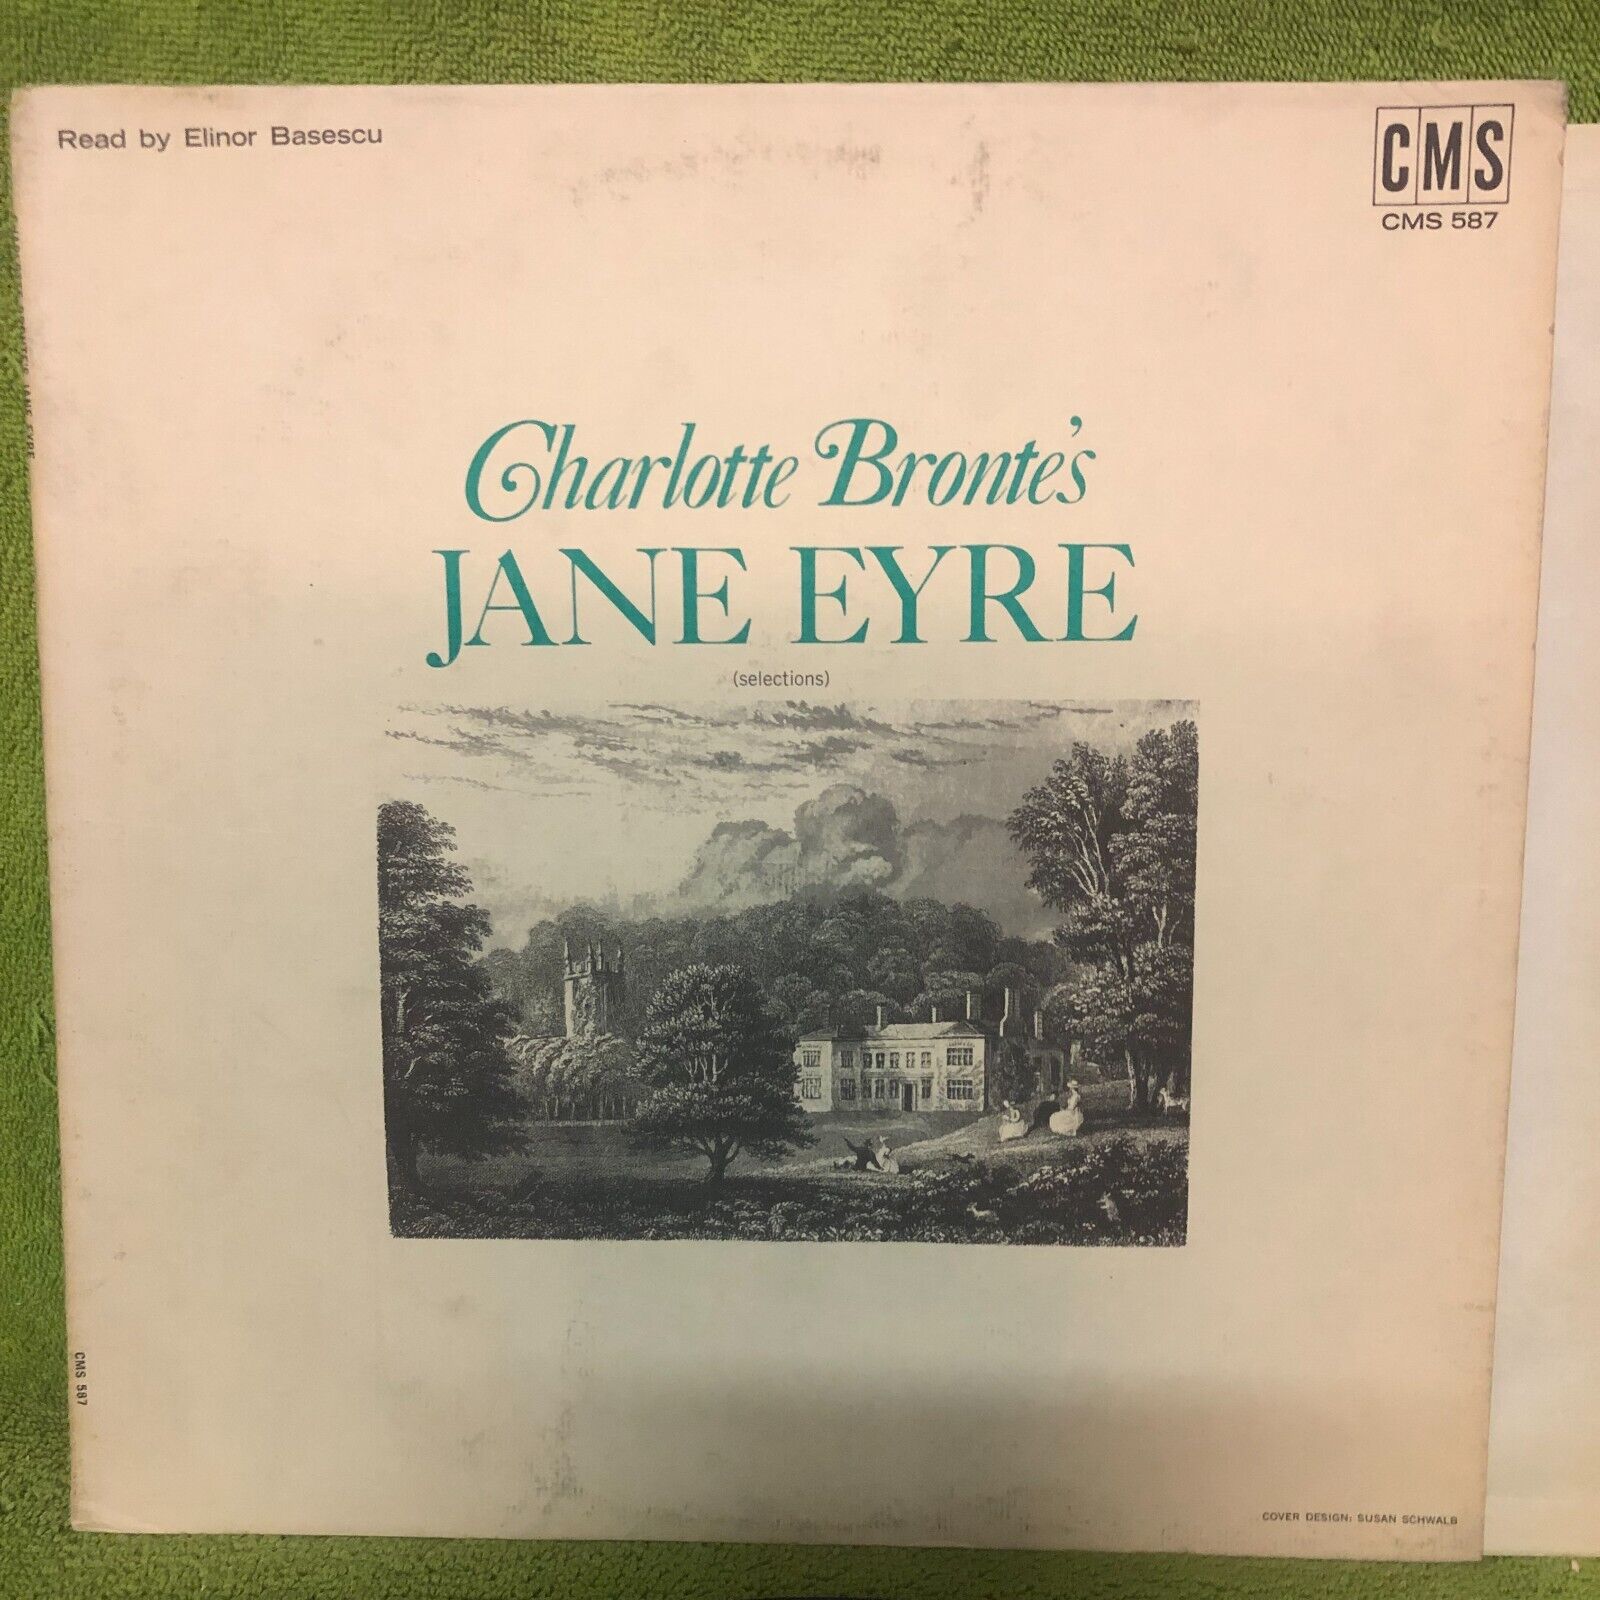 Elinor Basescu – Charlotte Bronte’s Jane Eyre - VINYL RECORD LP